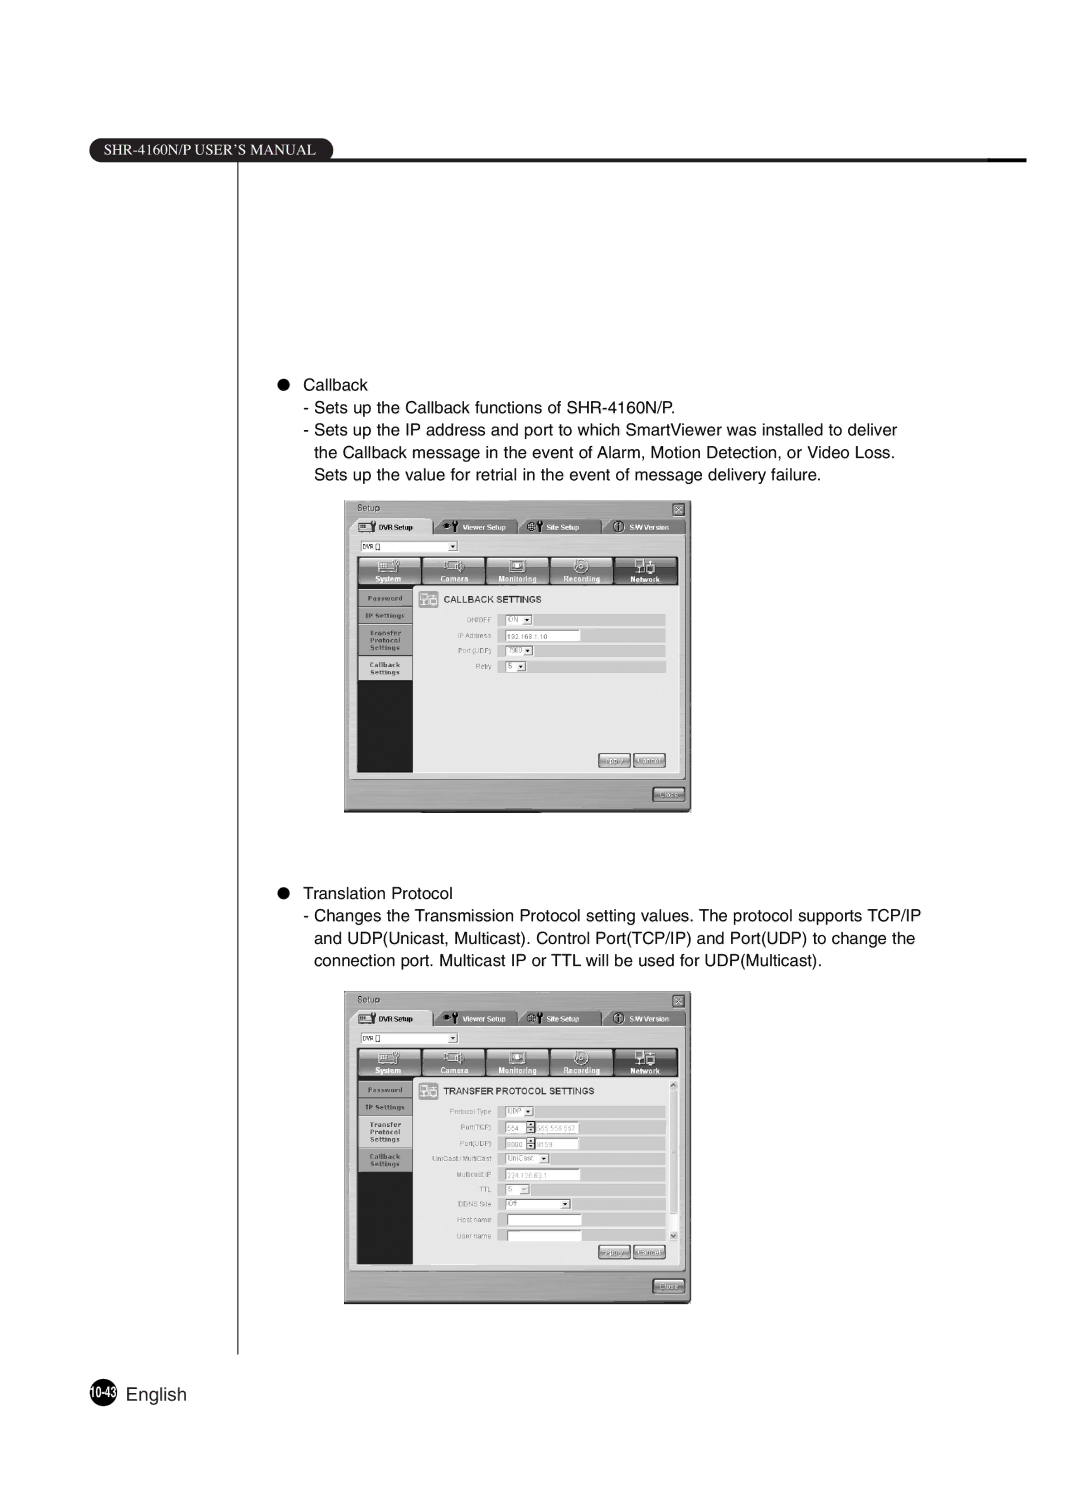 Samsung SHR-4160P manual 10-43English, Callback Sets up the Callback functions of SHR-4160N/P 